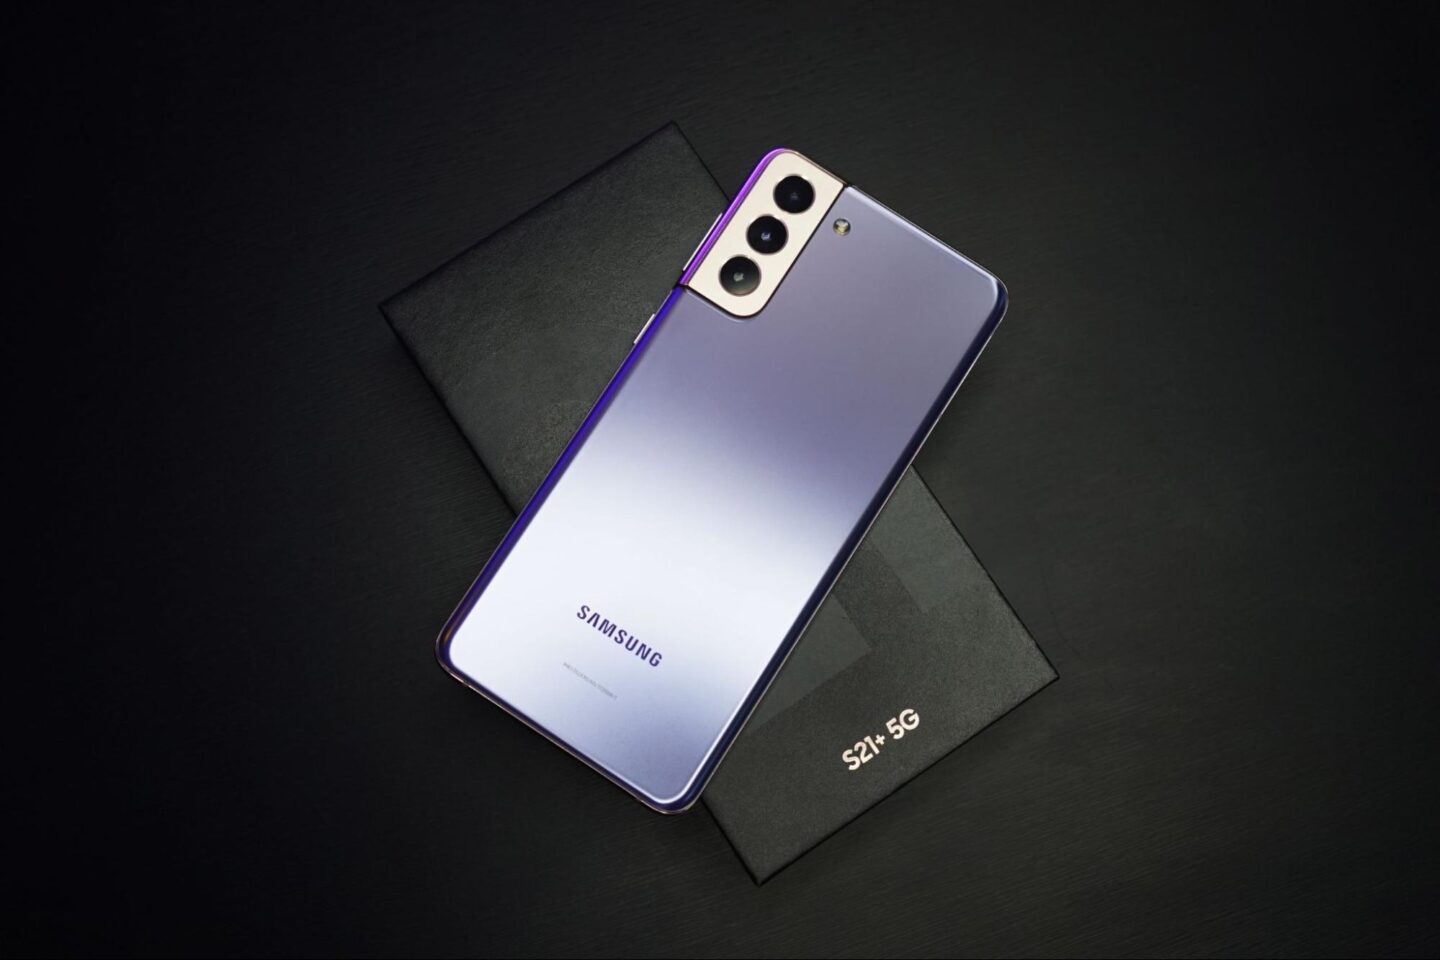 purple s21+5g Samsung phone on a black background